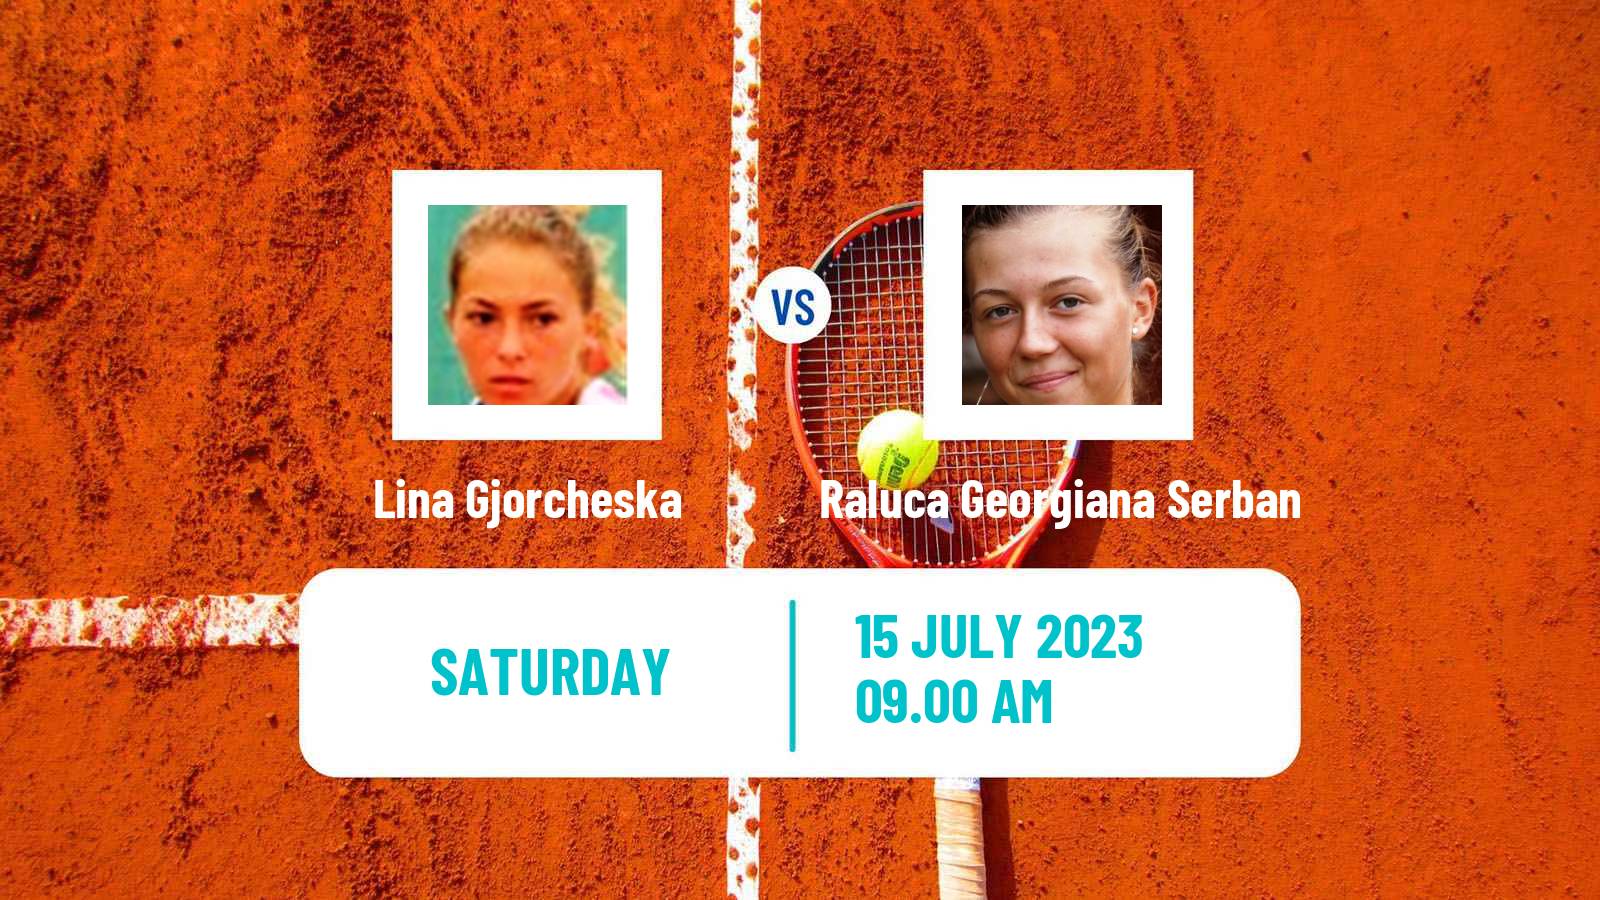 Tennis ITF W60 Rome 2 Women Lina Gjorcheska - Raluca Georgiana Serban